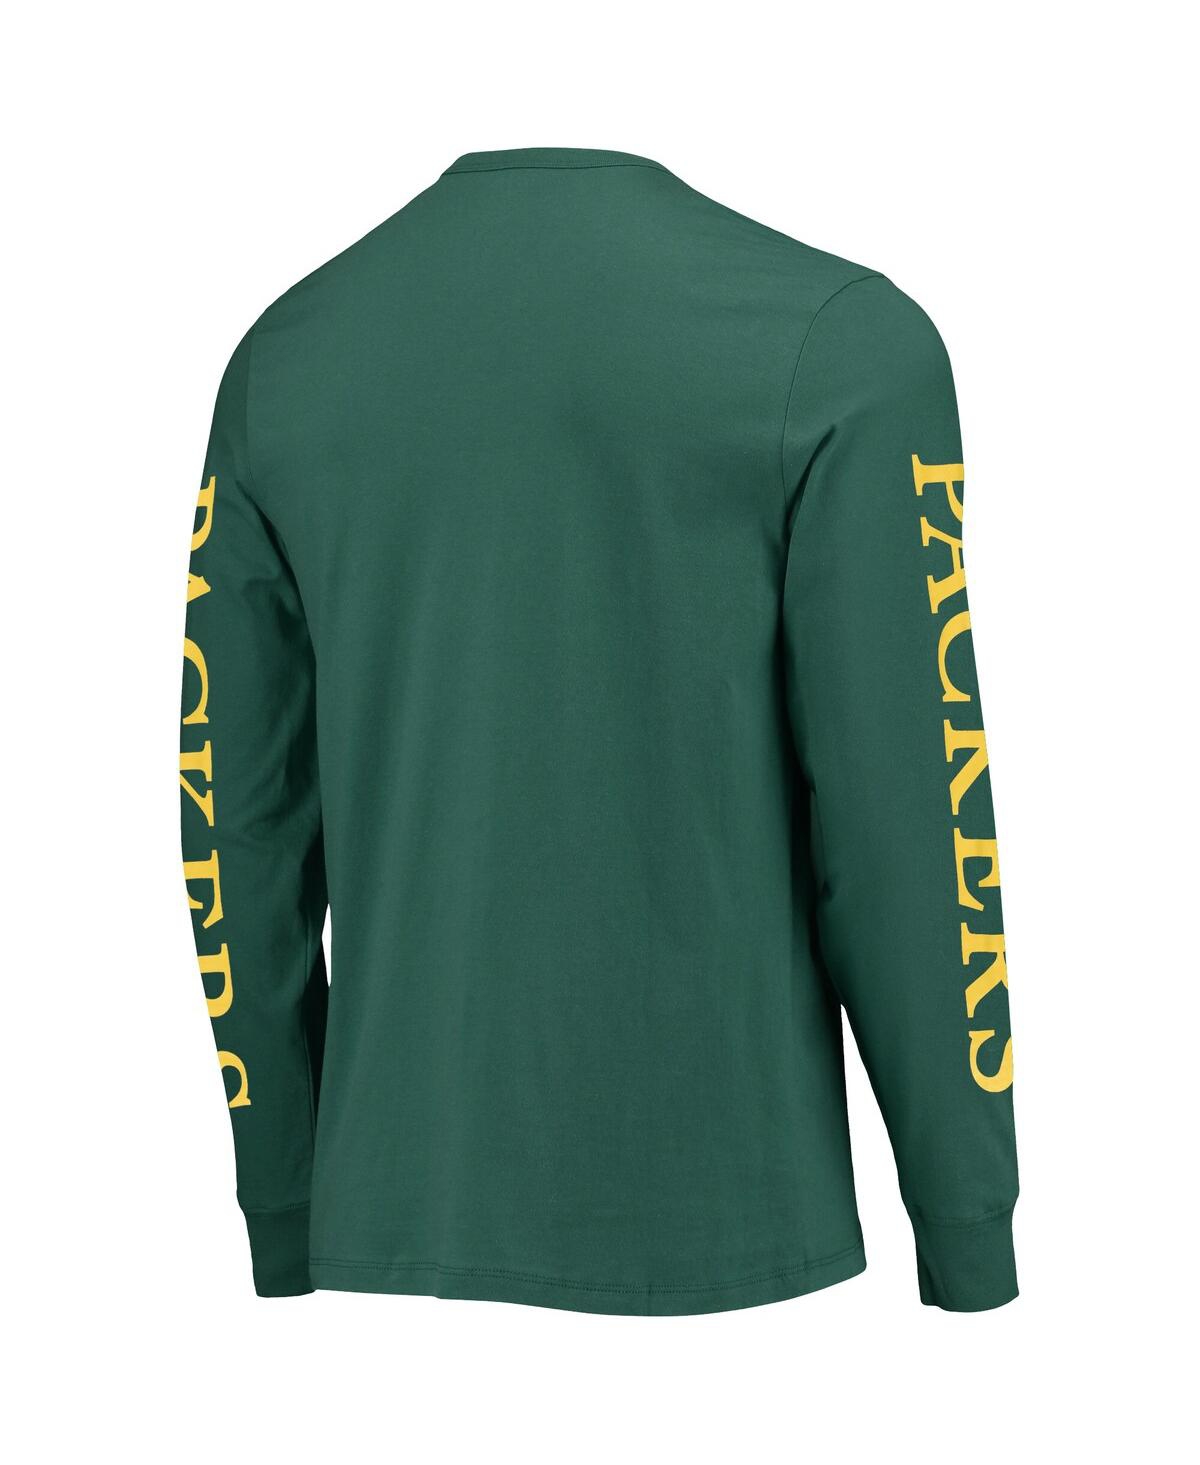 Shop 47 Brand Men's Green Bay Packers ' Green Franklin Long Sleeve T-shirt